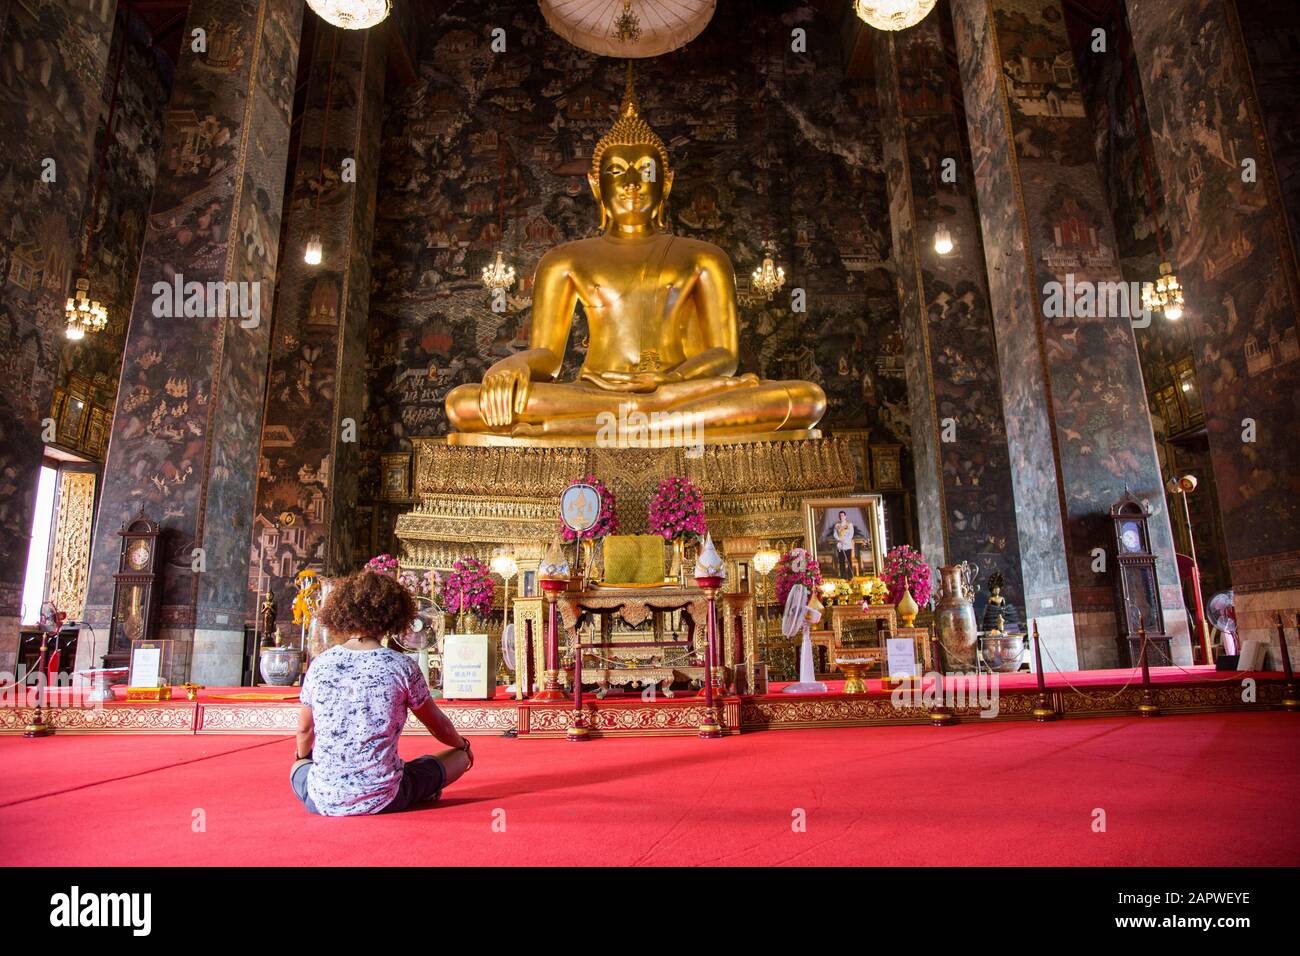 Man with curly hair meditating at Wat Suthat Thepwararam temple Stock Photo